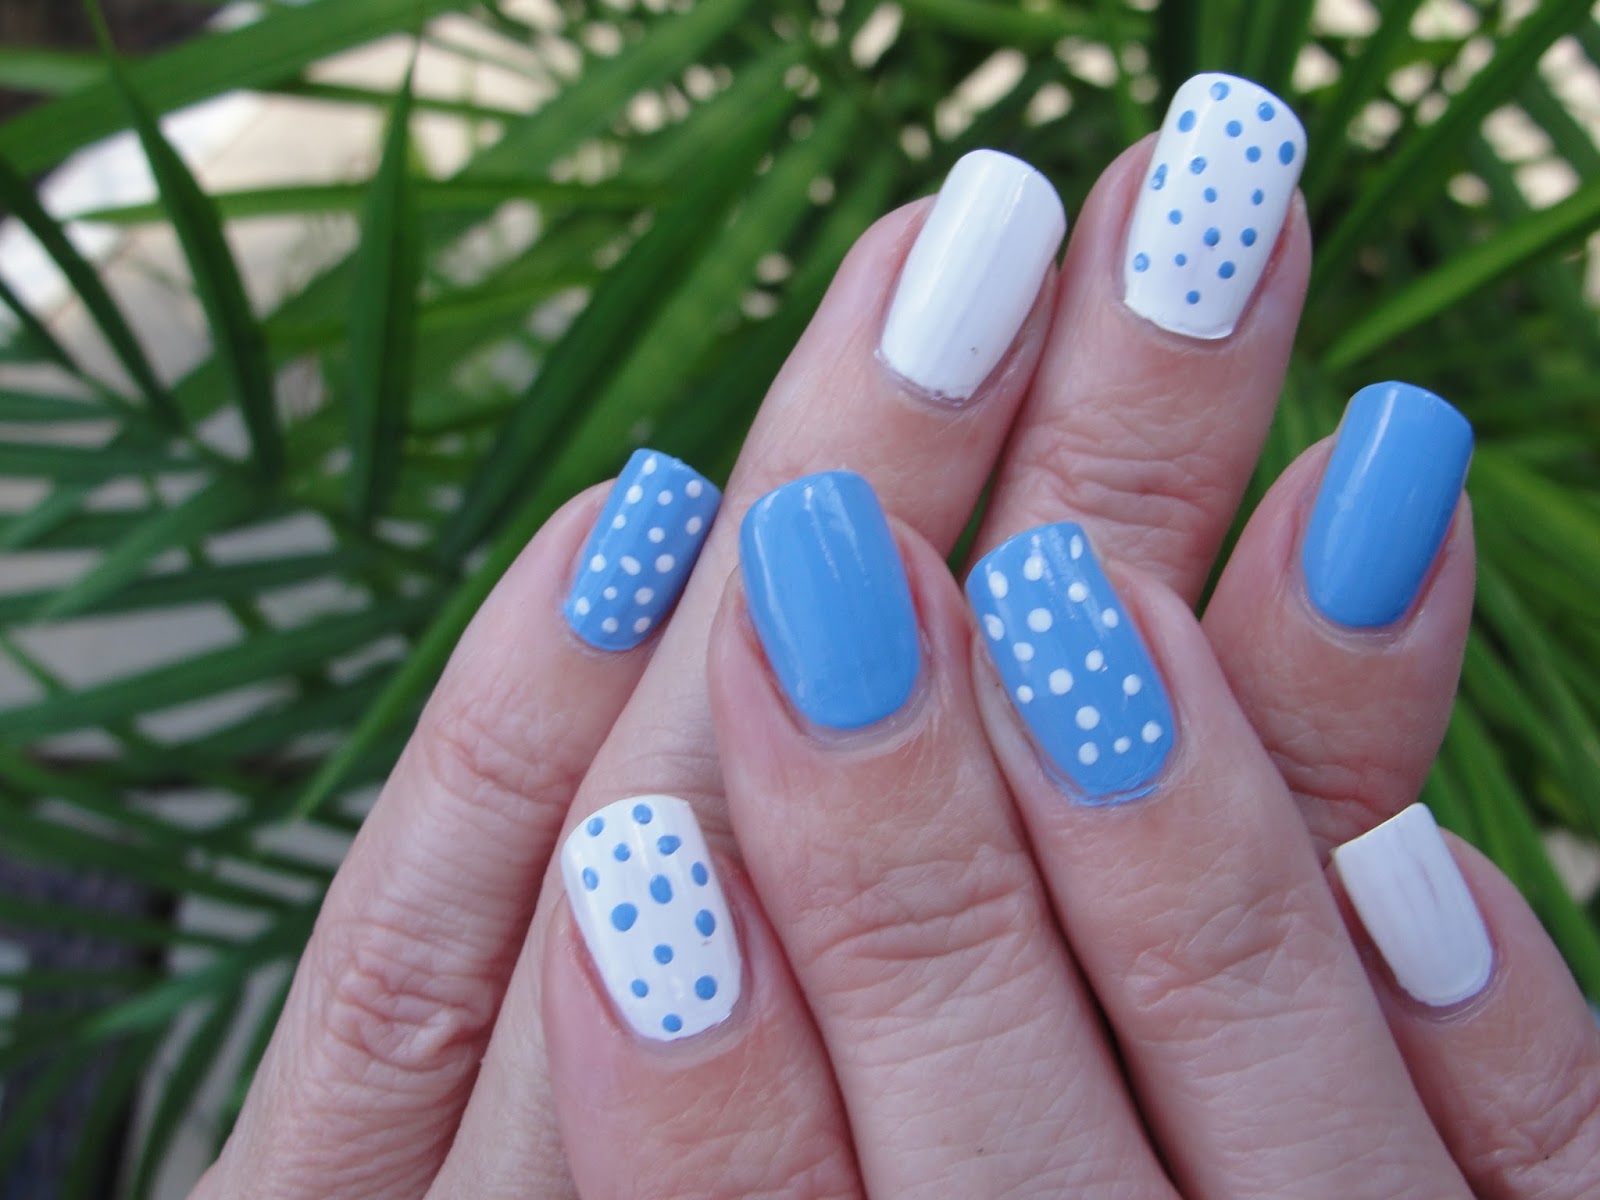 3. Easy purple polka dot nails - wide 3